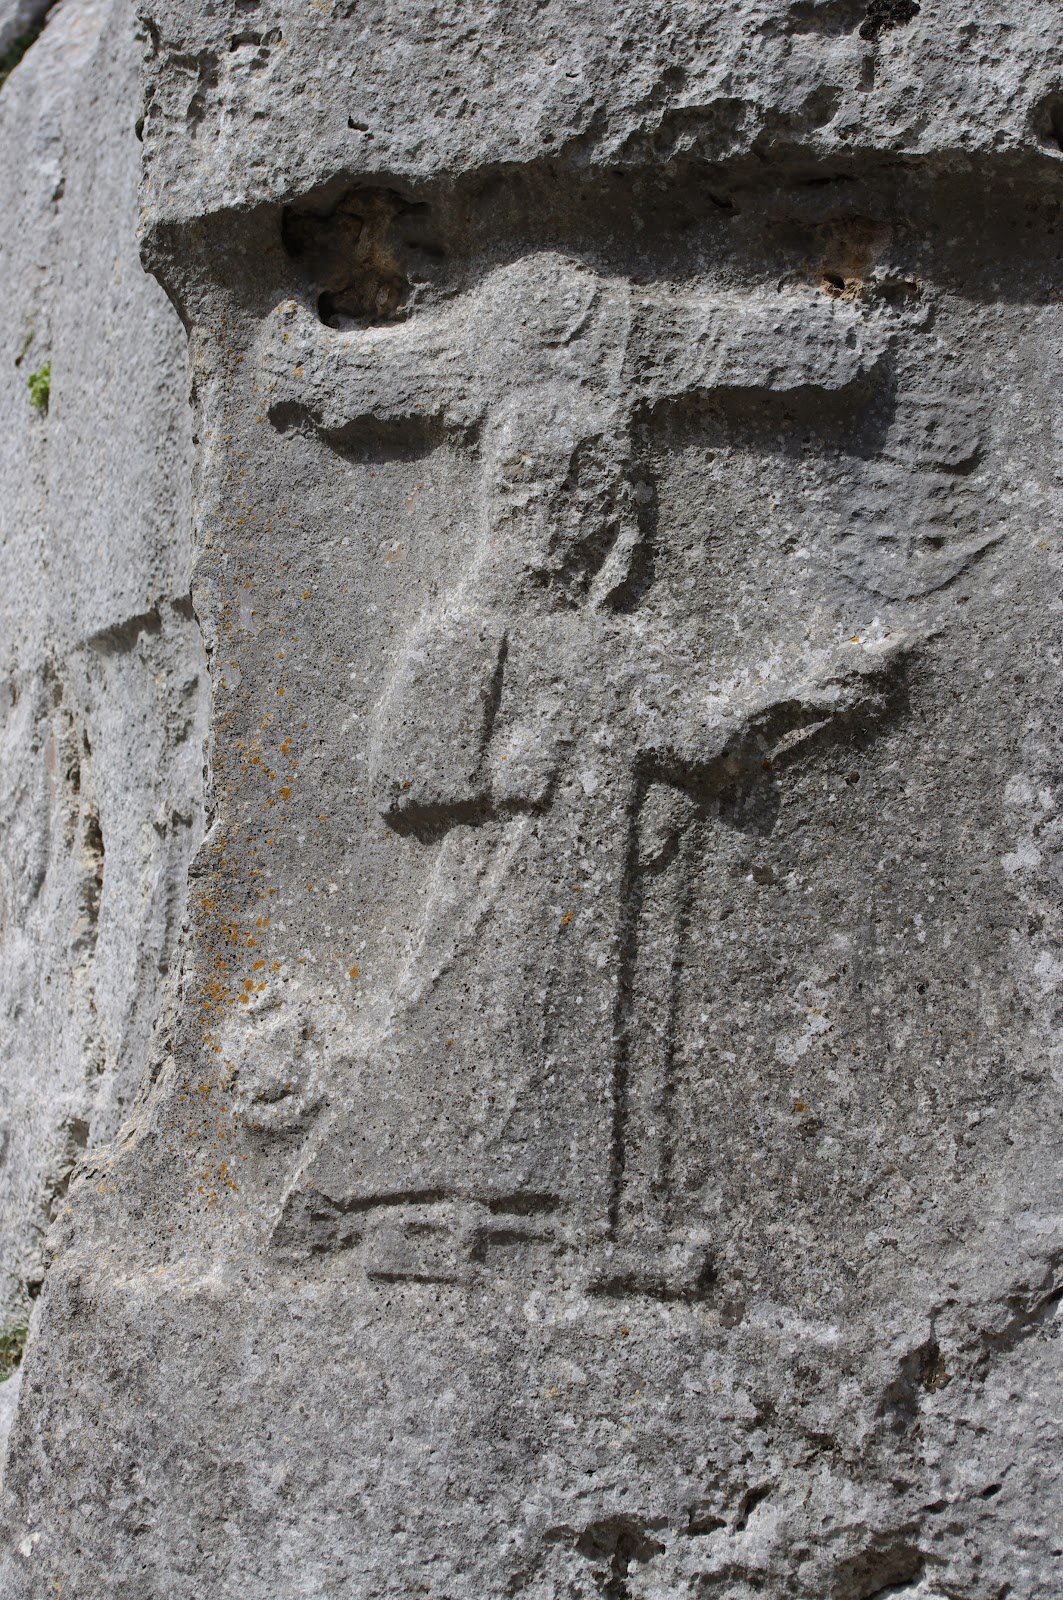 1l - flying disk symbol of Nibiru above Hittite alien gods